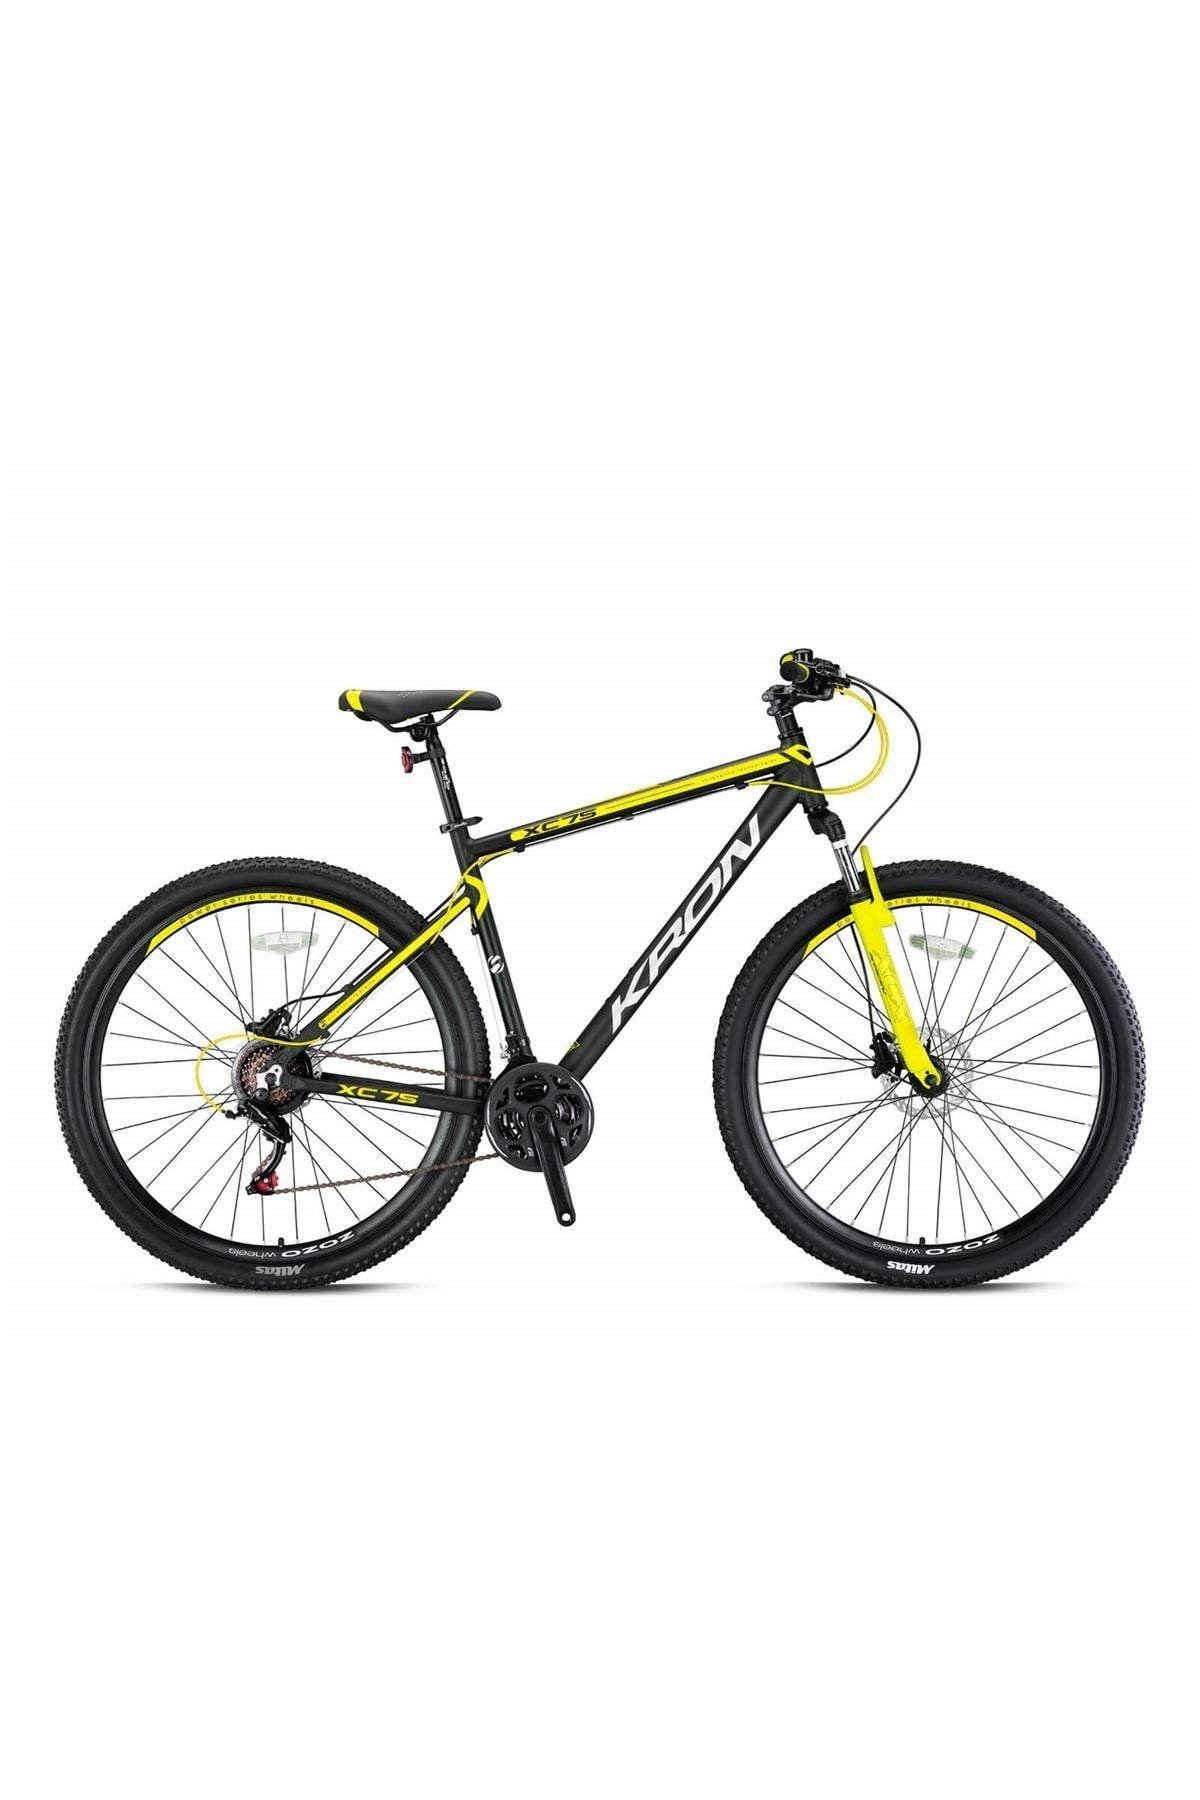 Kron Xc75 27.5 Jant Hd 19k Erkek Dağ Bisikleti M.siyah-a.sarı